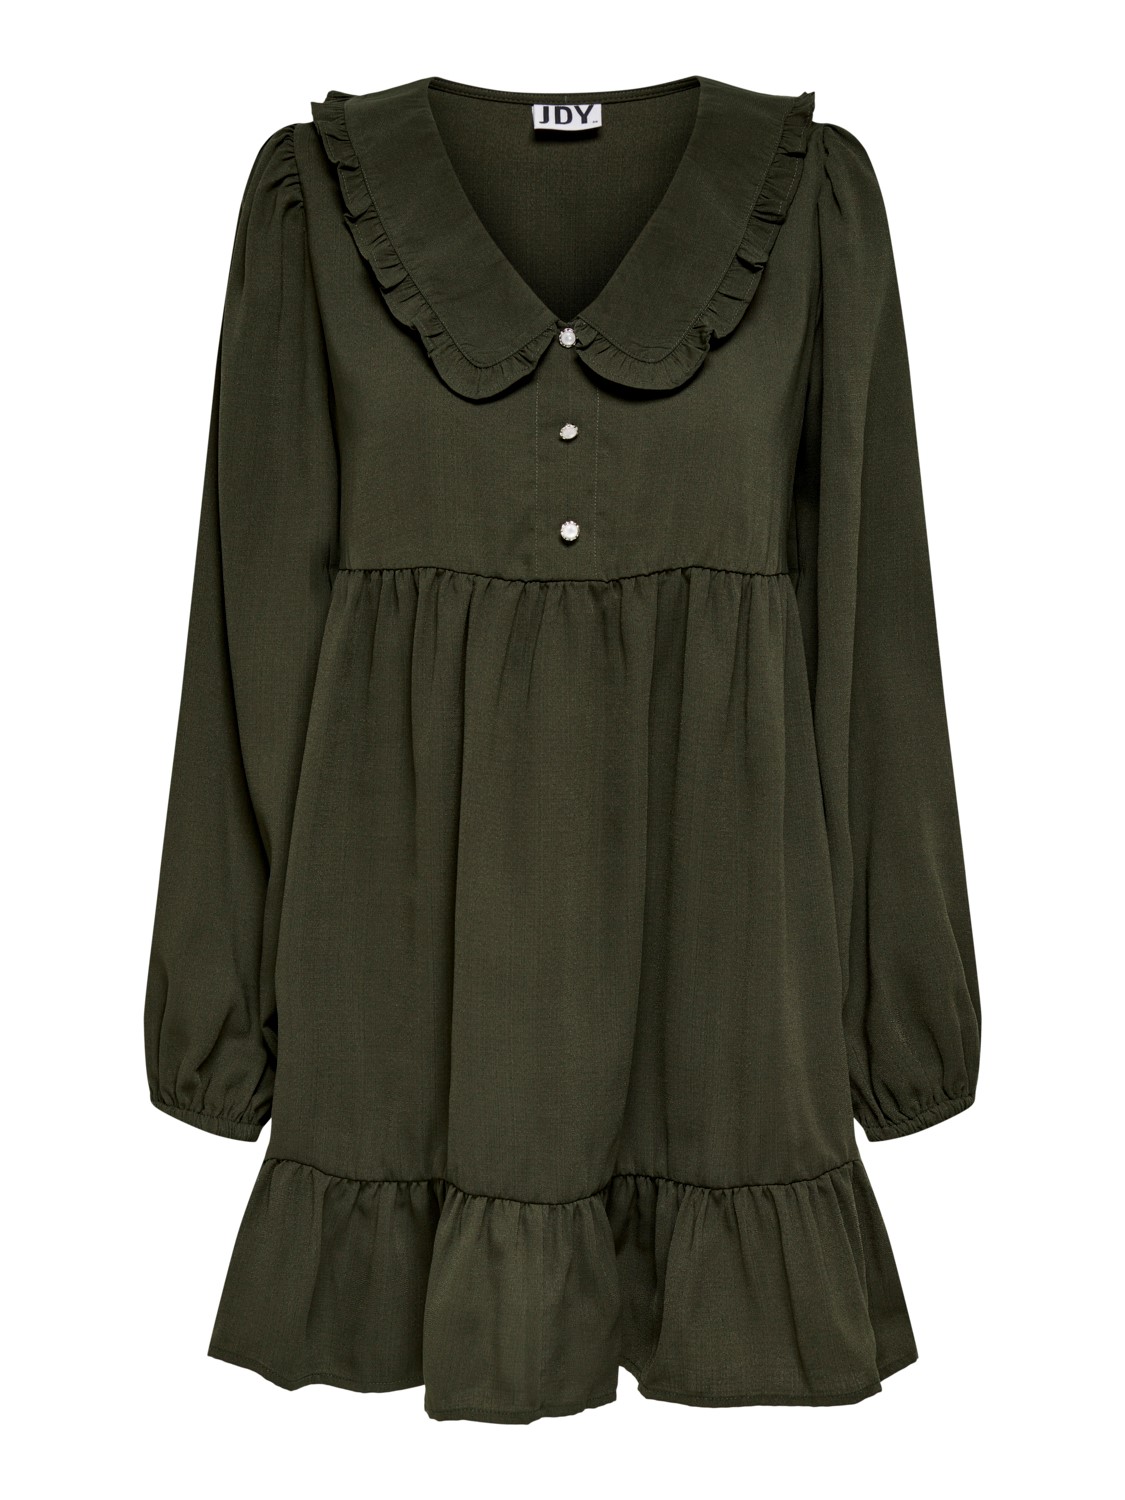 Jacqueline de Young Selina L/S collar short dress, grønn kjole